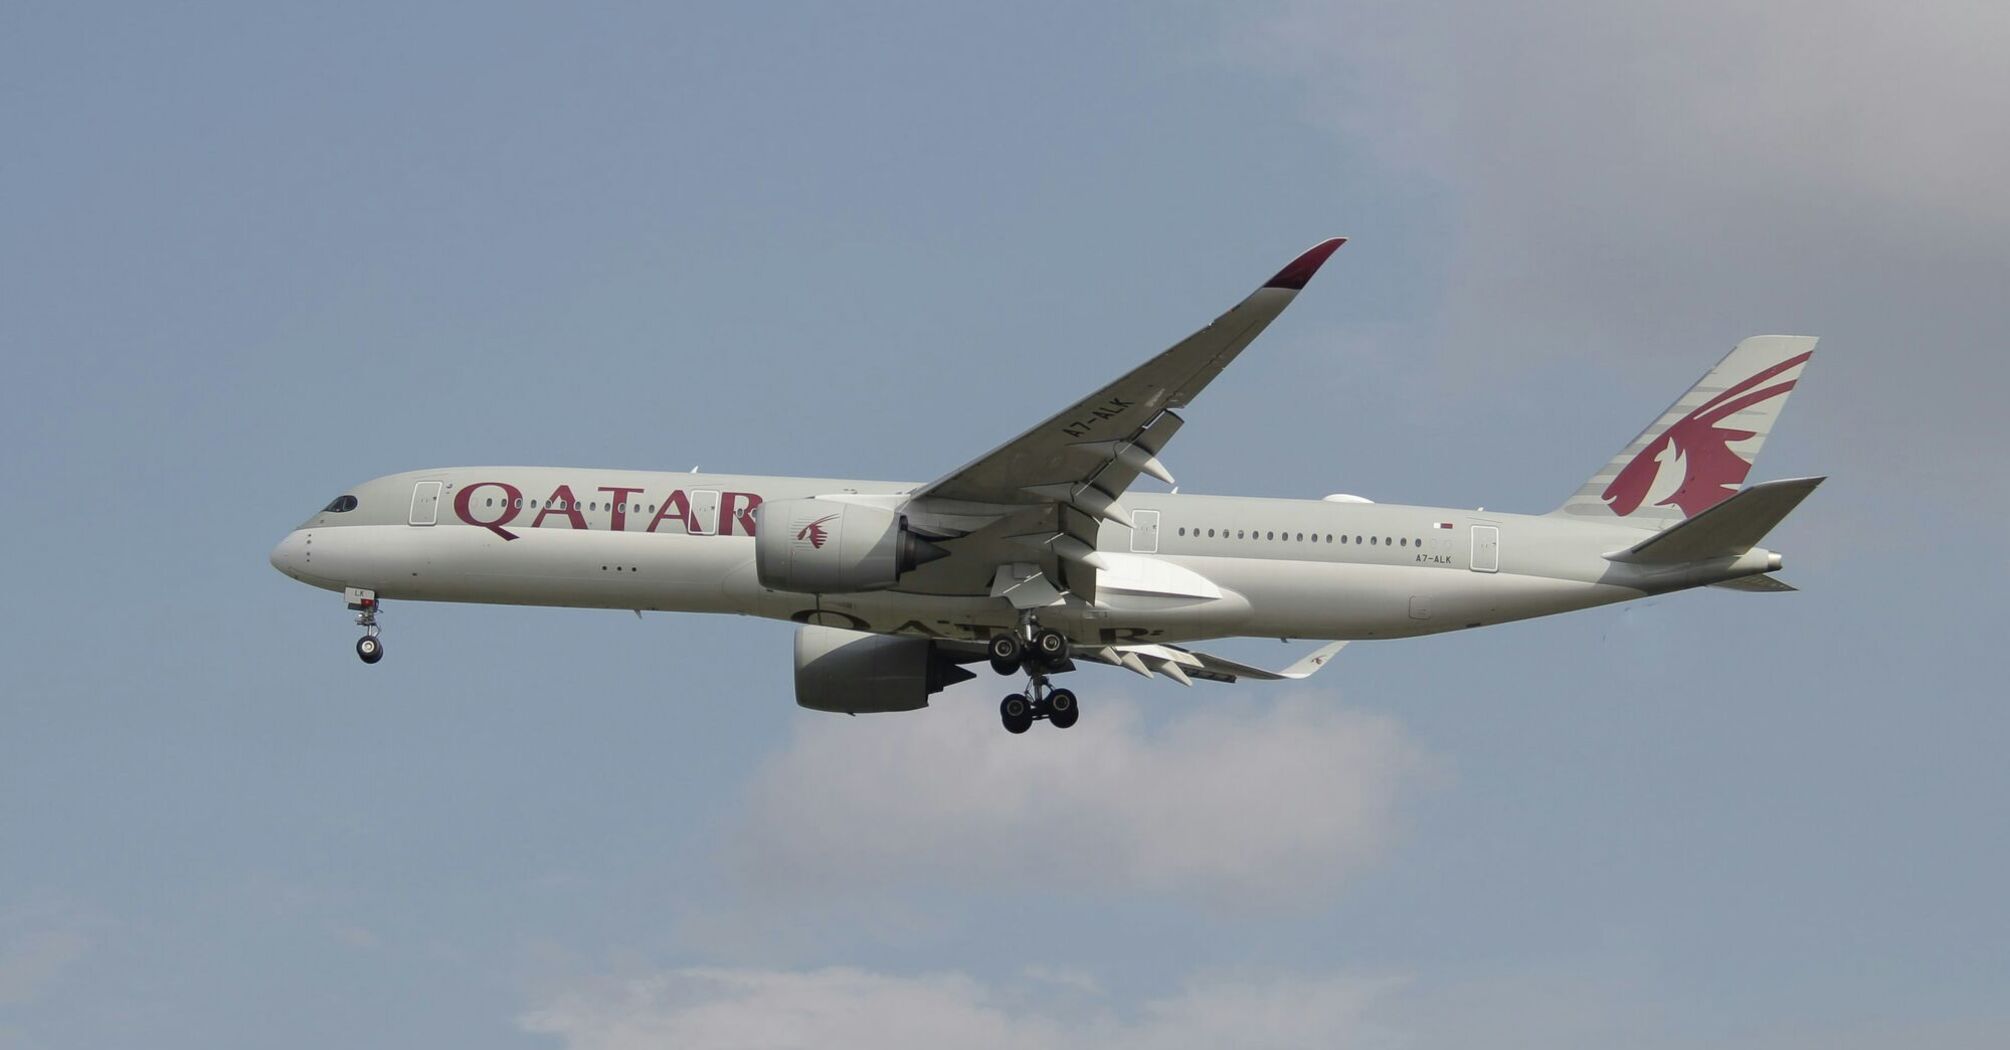 A Qatar Airways aircraft in flight against a clear sky 